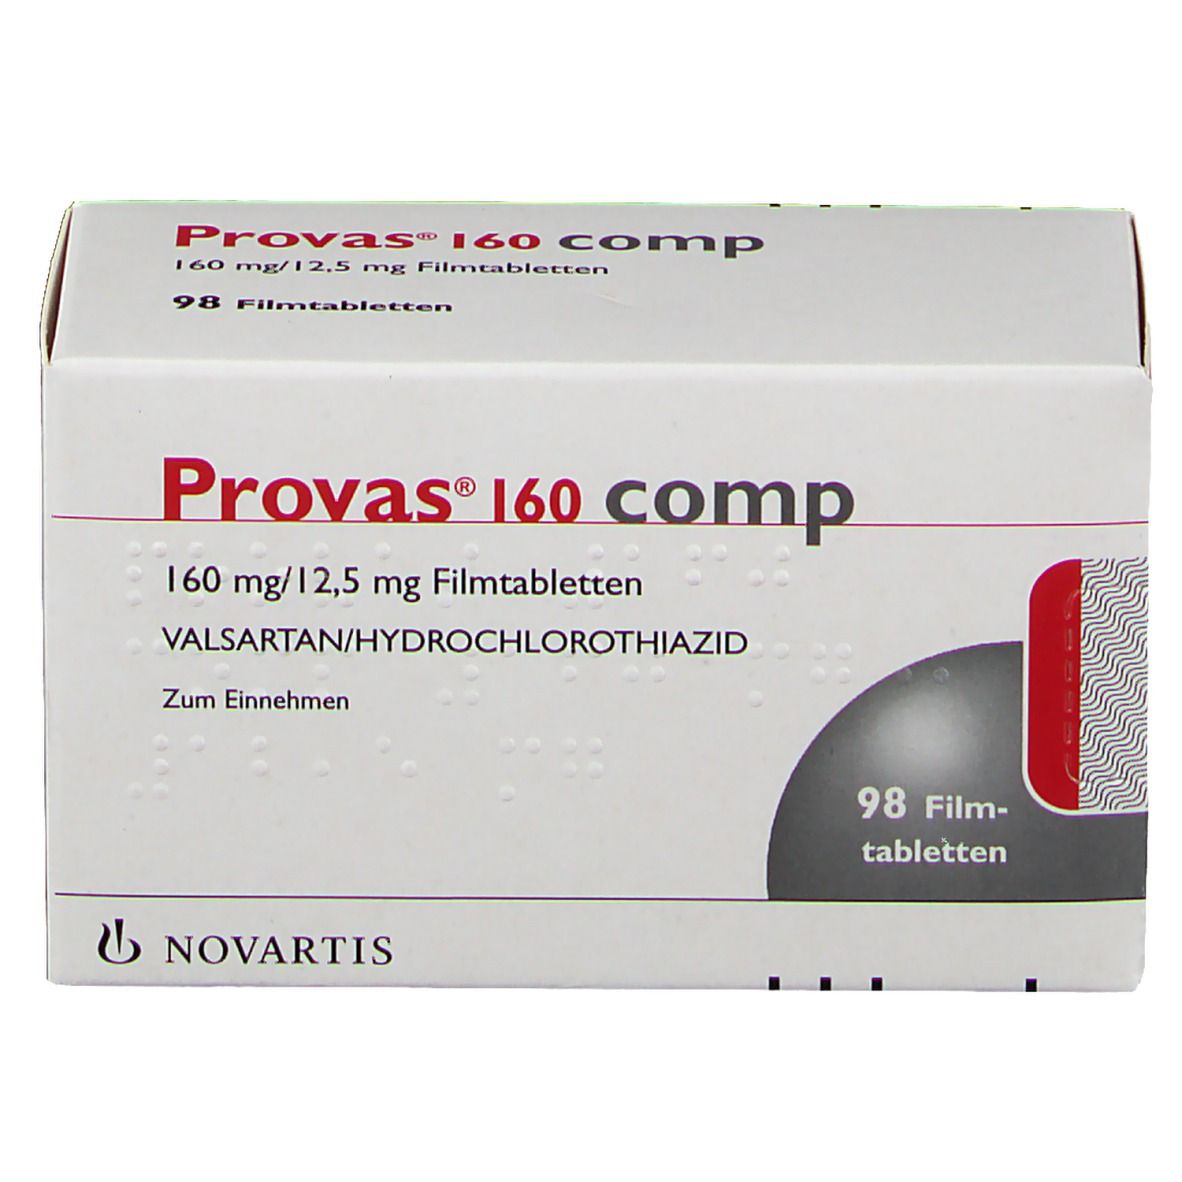 Provas® 160 comp 160 mg/12,5 mg